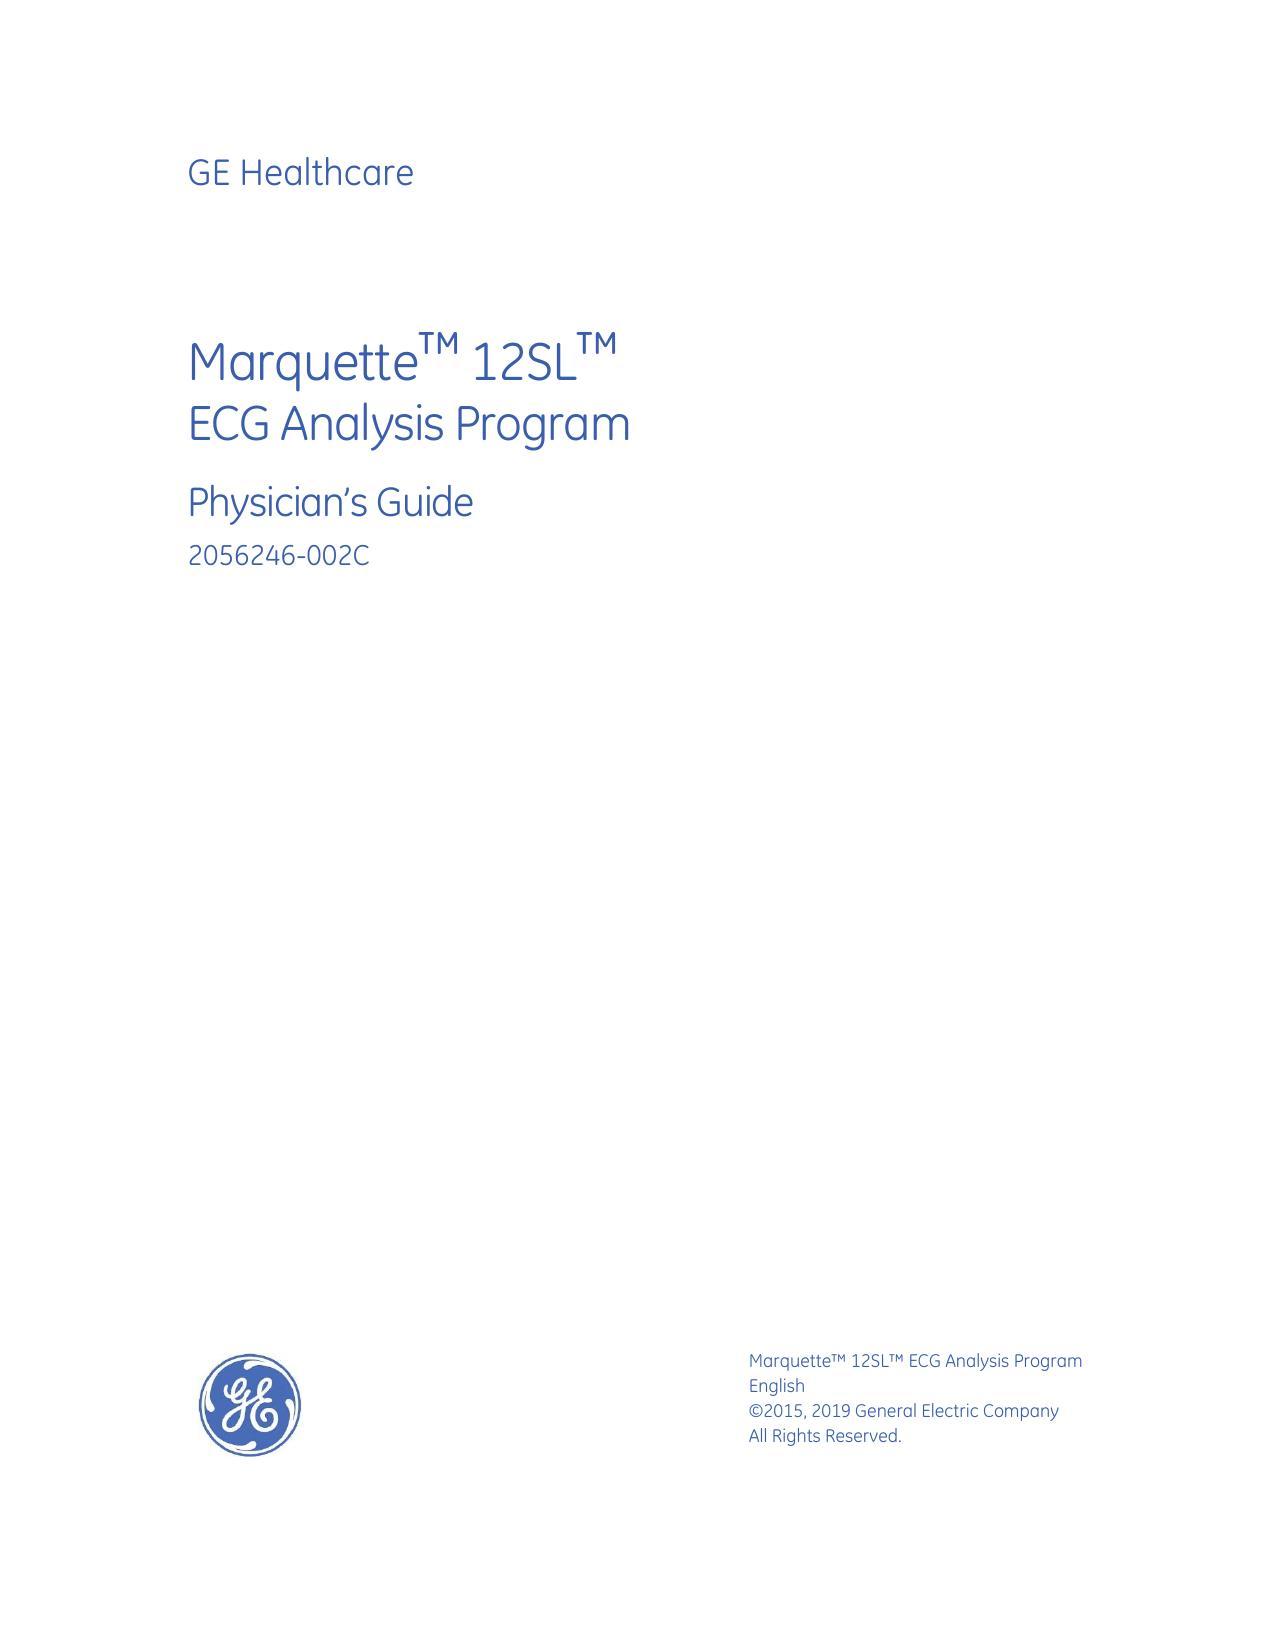 marquette-12sl-ecg-analysis-program-physicians-guide.pdf